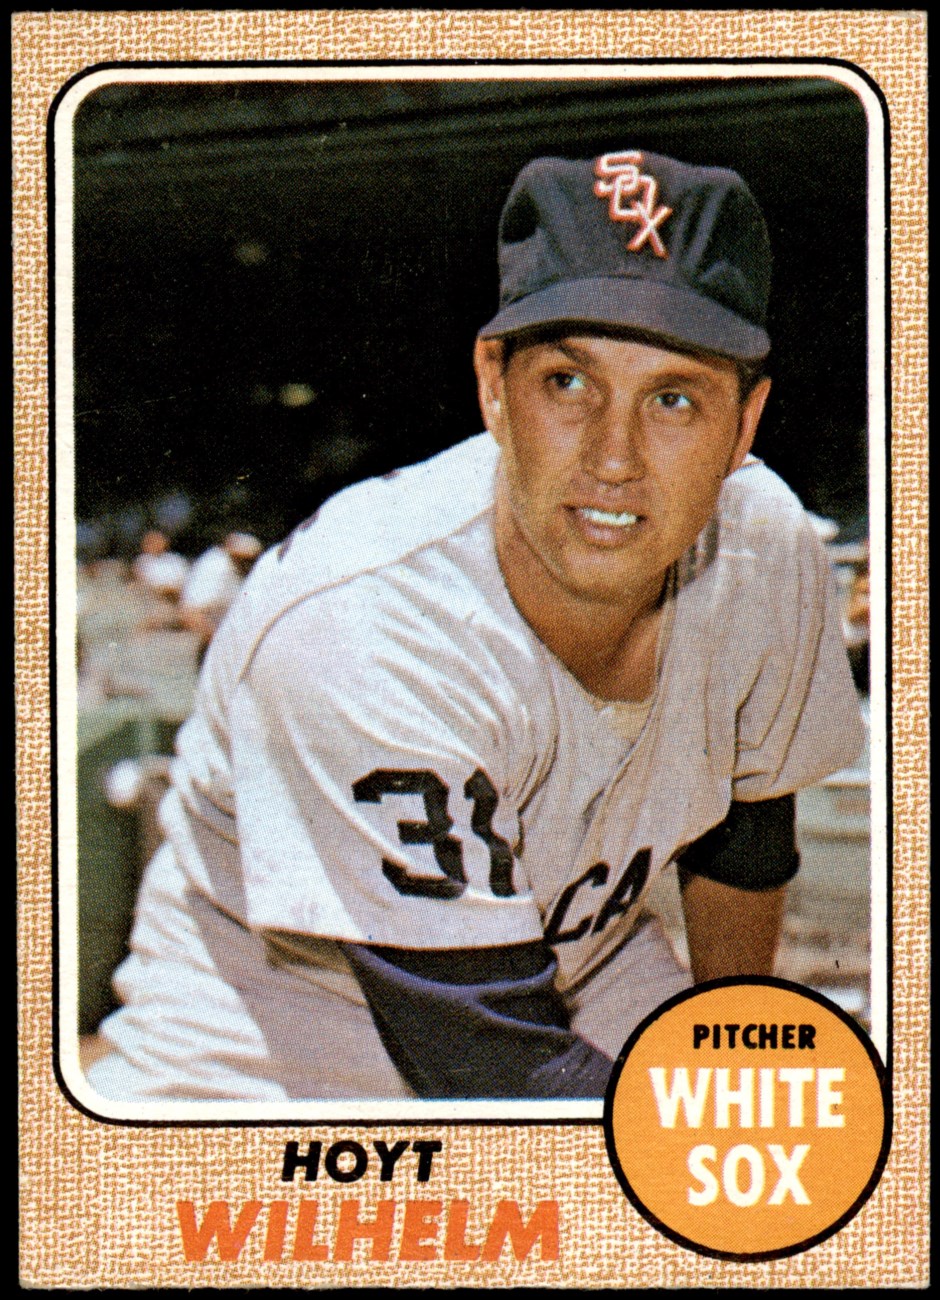 1968 Topps Baseball Card #564 Eddie Stanky Chicago White Sox